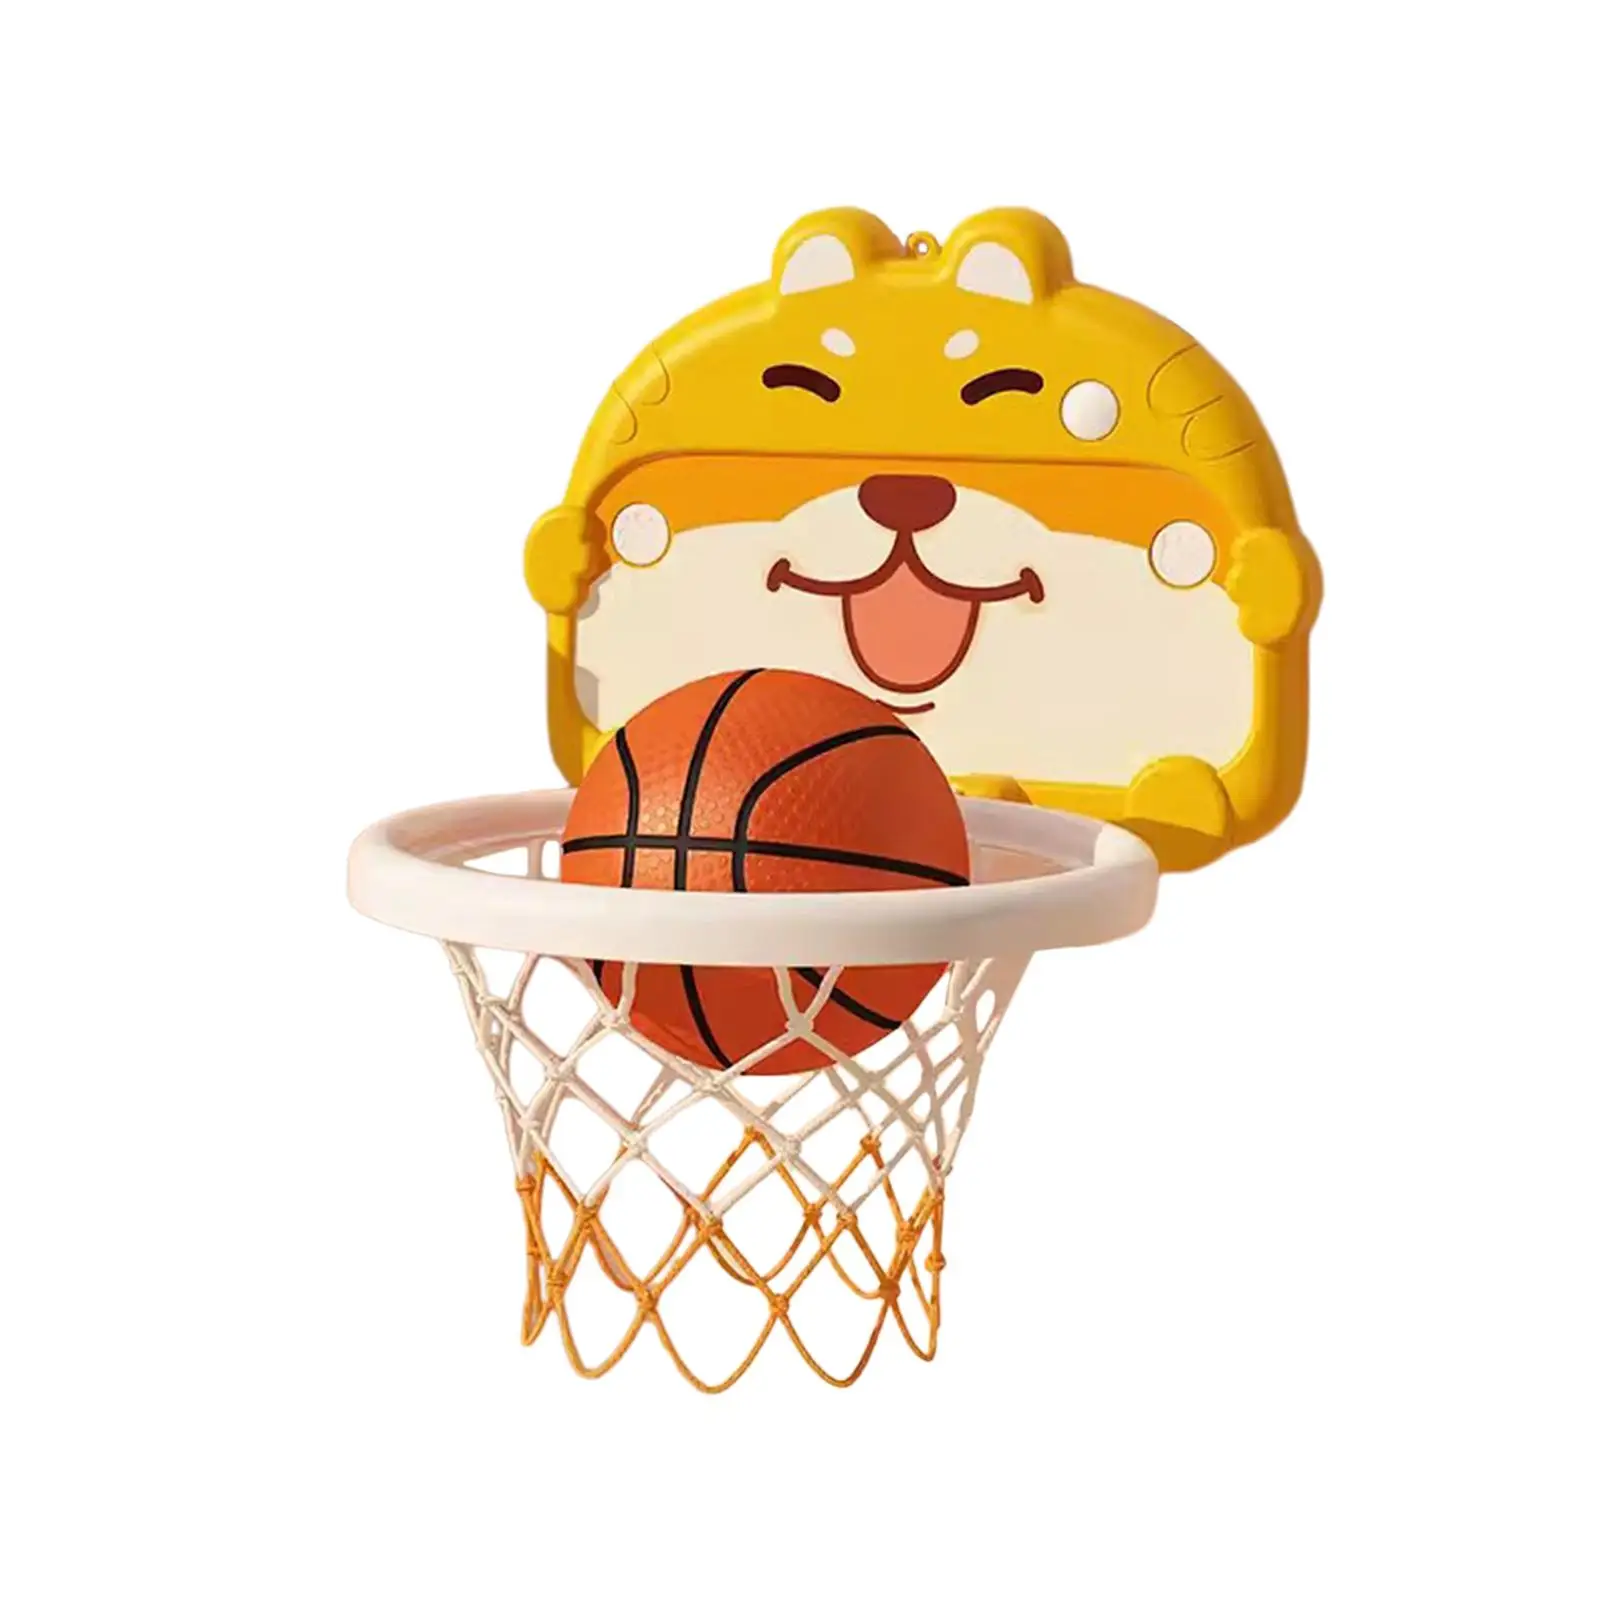 Mini Basketball Hoop Set Family Games Activity Centers, Educational Basketball